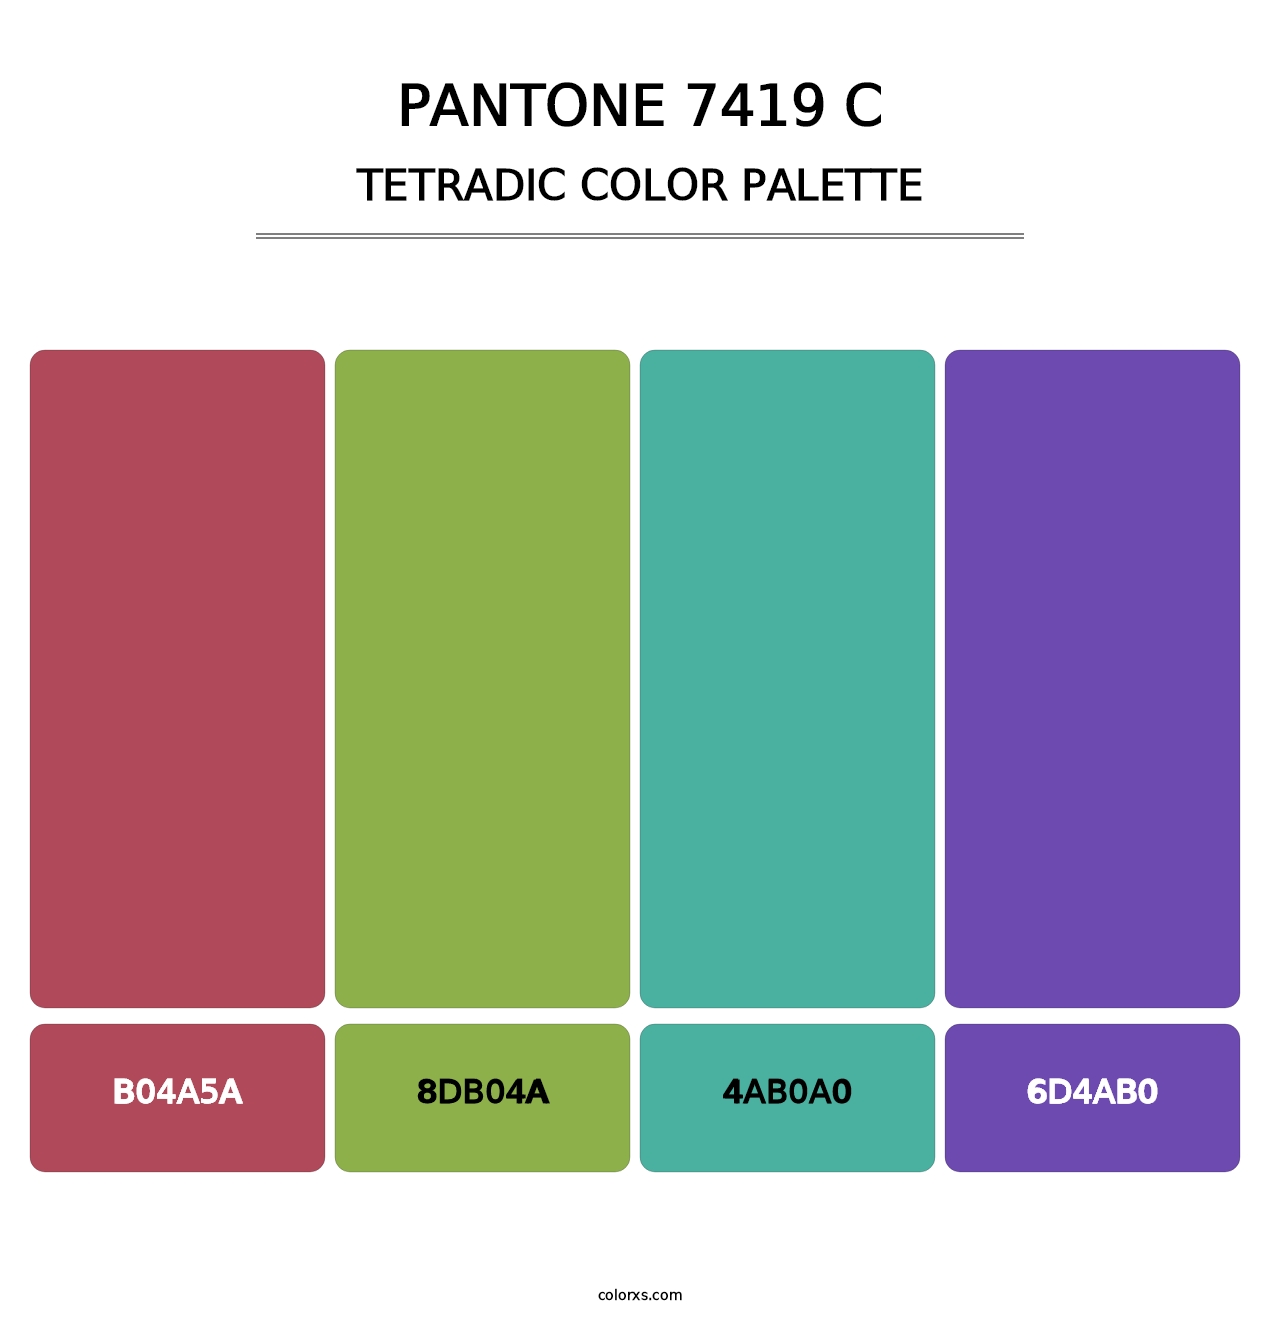 PANTONE 7419 C - Tetradic Color Palette